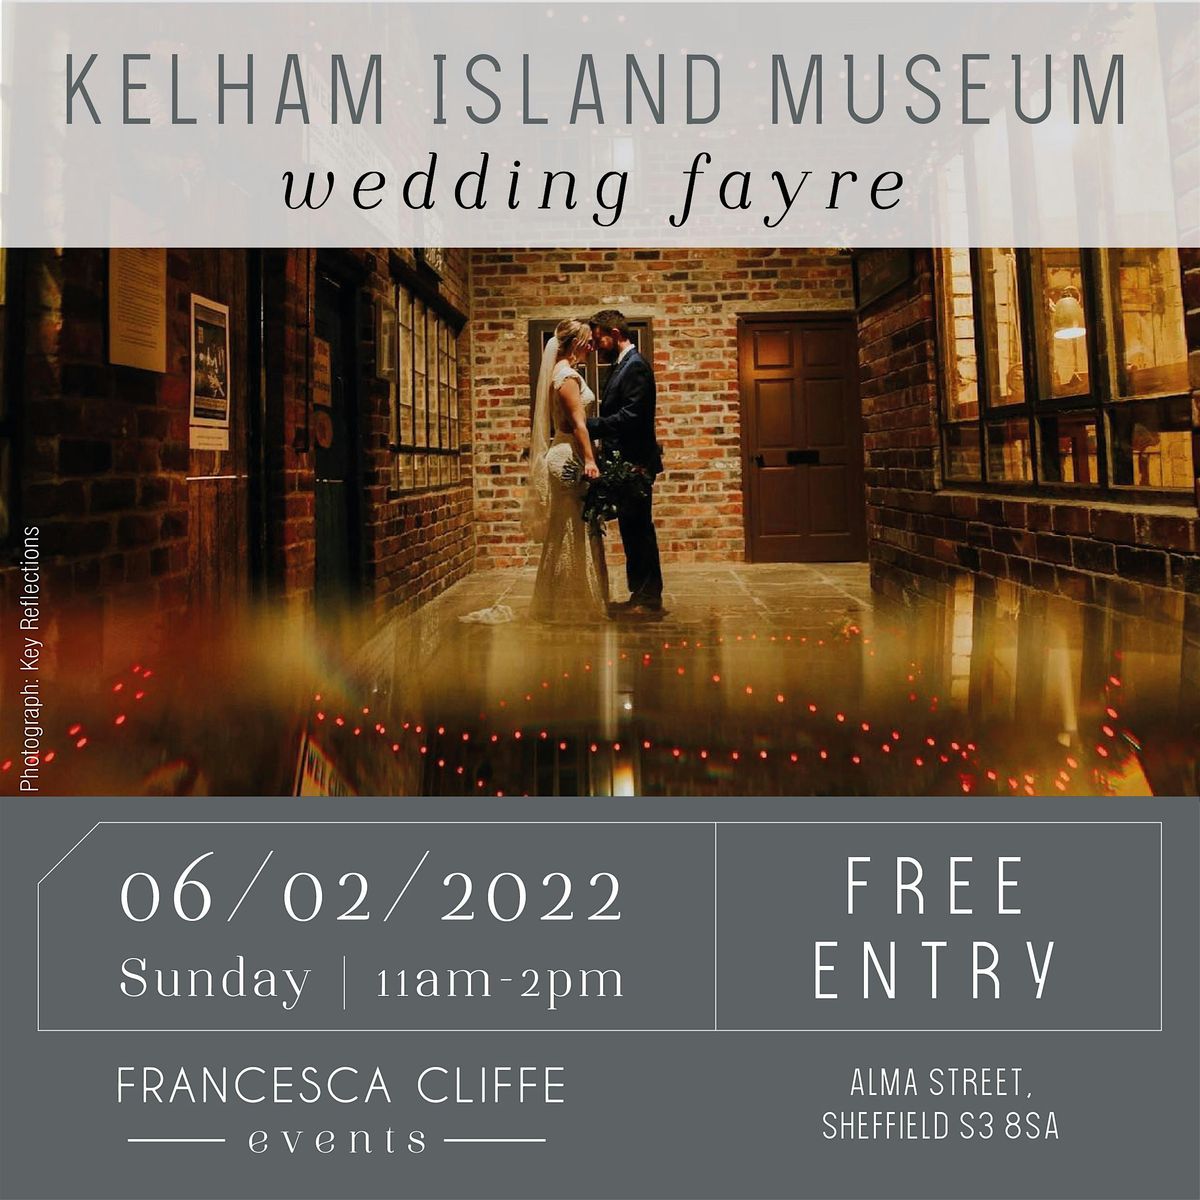 Kelham Island Museum - Wedding fayre